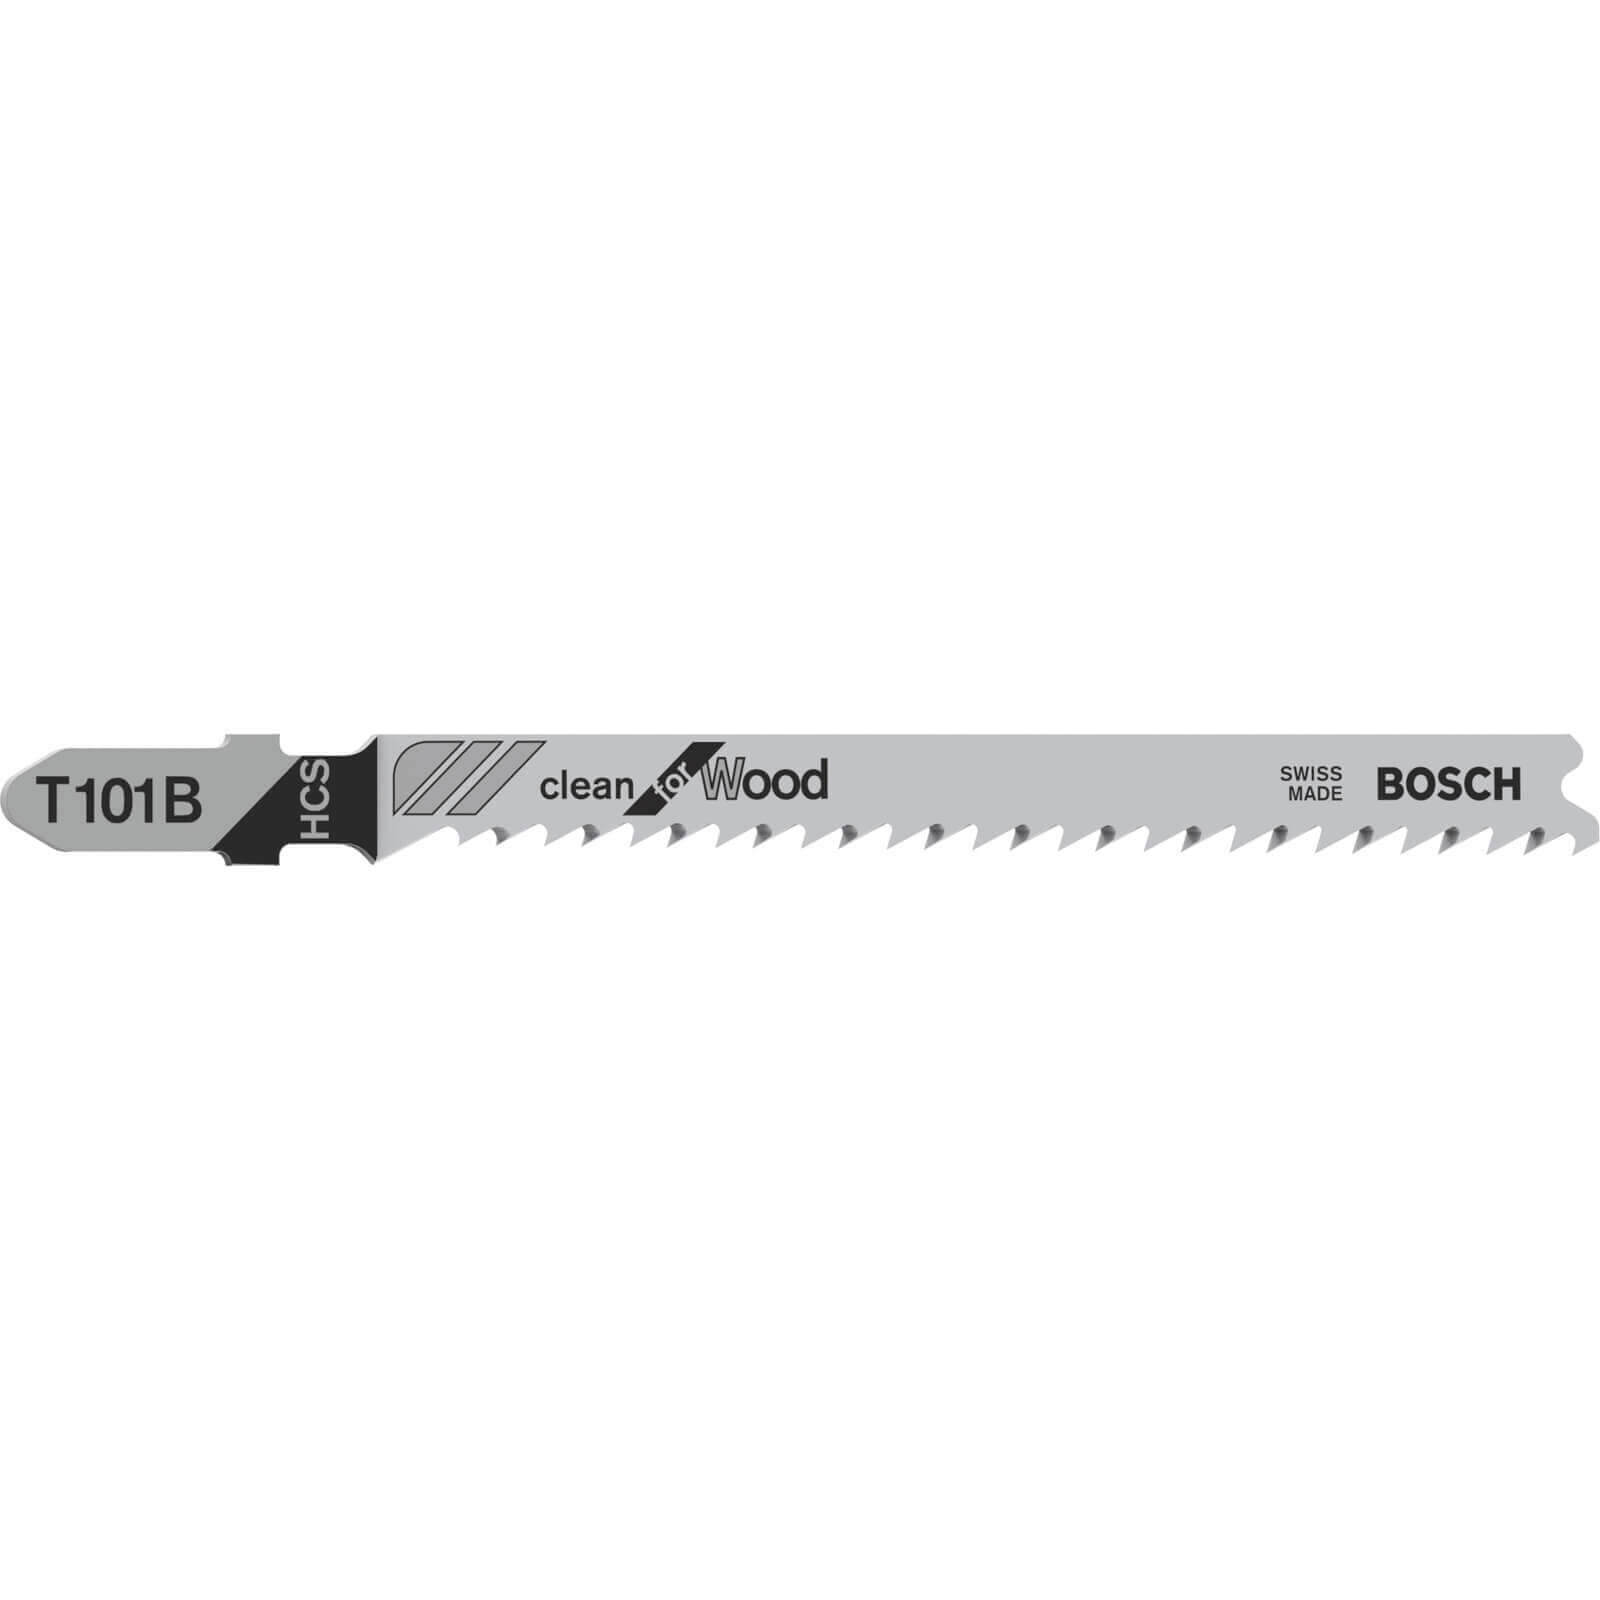 Photo of Bosch T101 B Wood Cutting Jigsaw Blades Pack Of 25